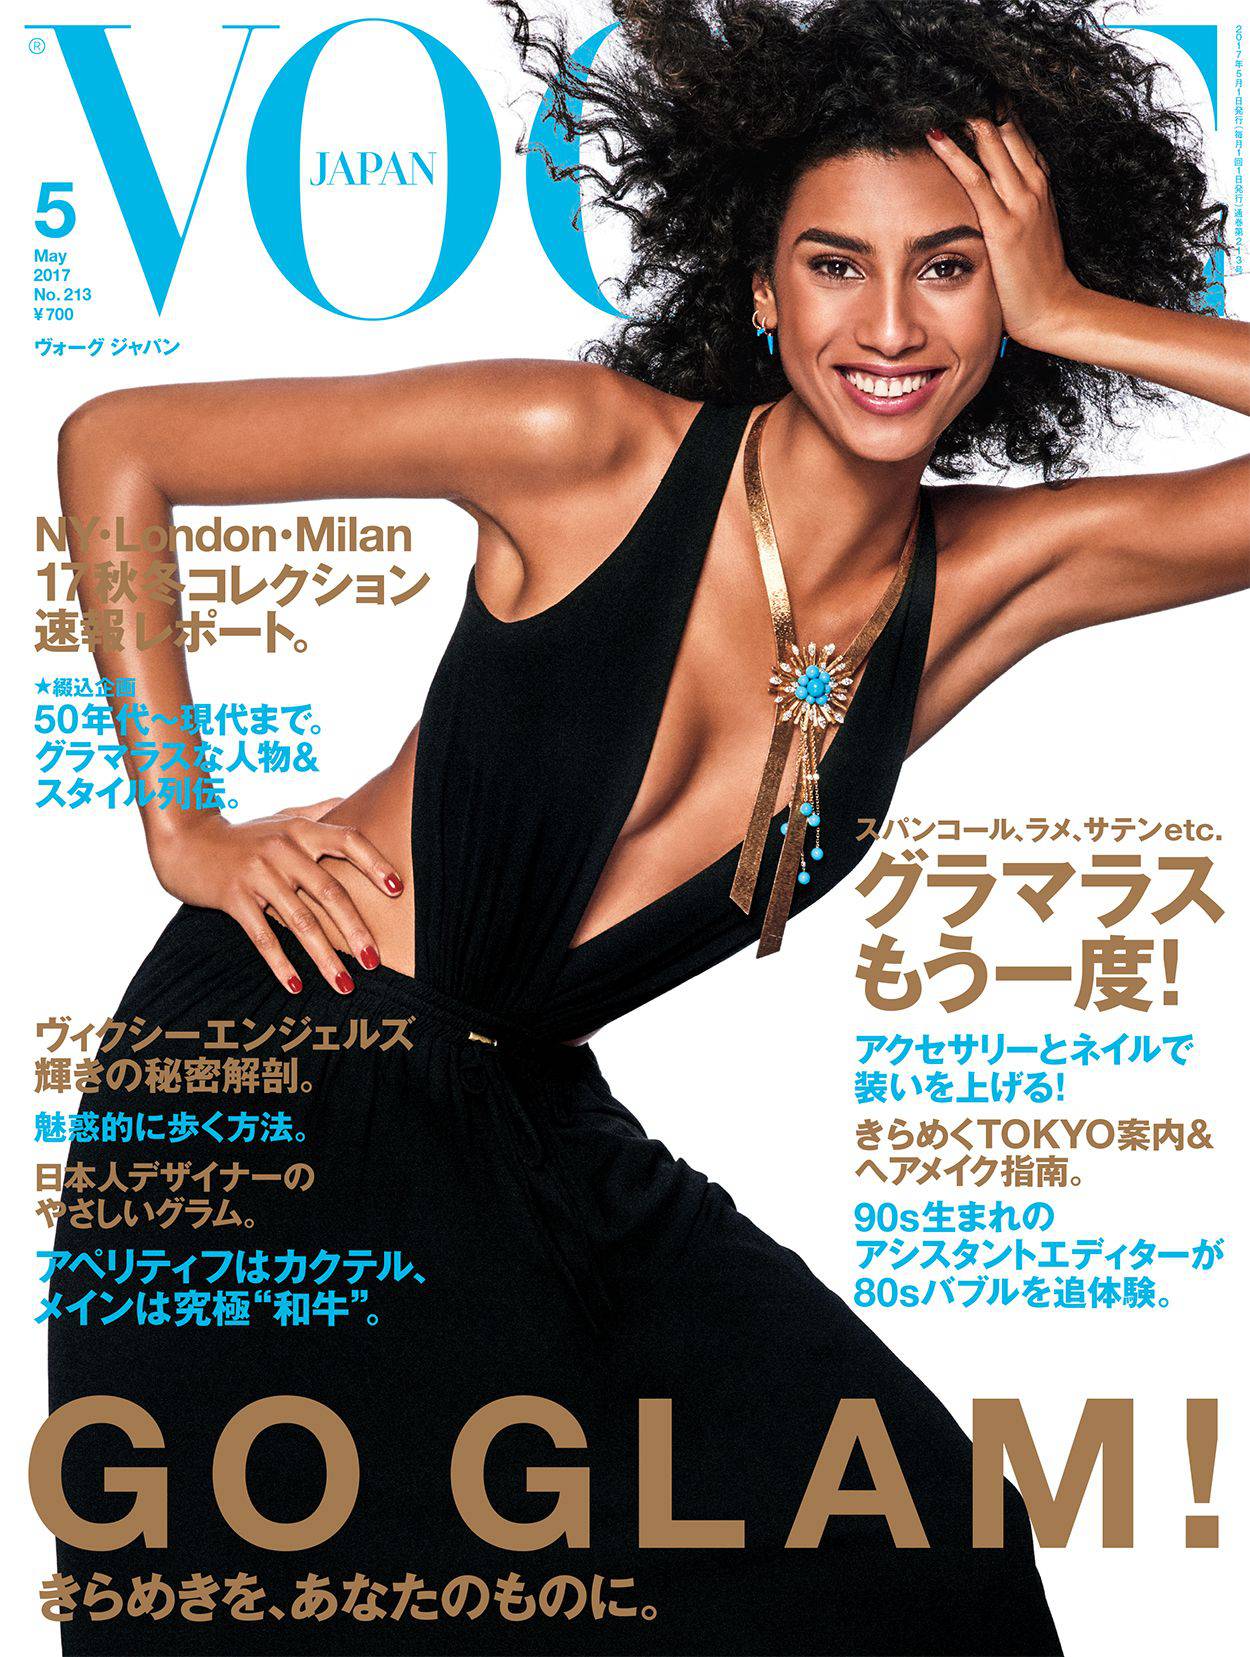 Imaan Hammam на страницах журнала Vogue Japan